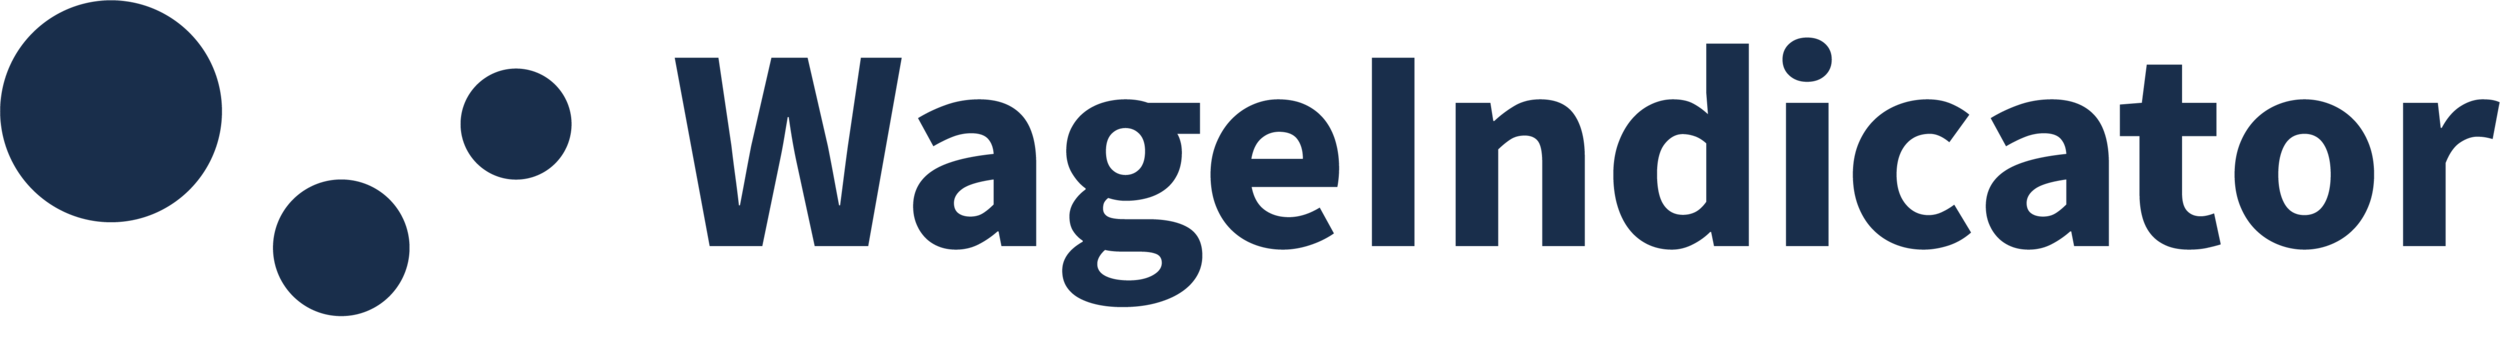 WageIndicator logo